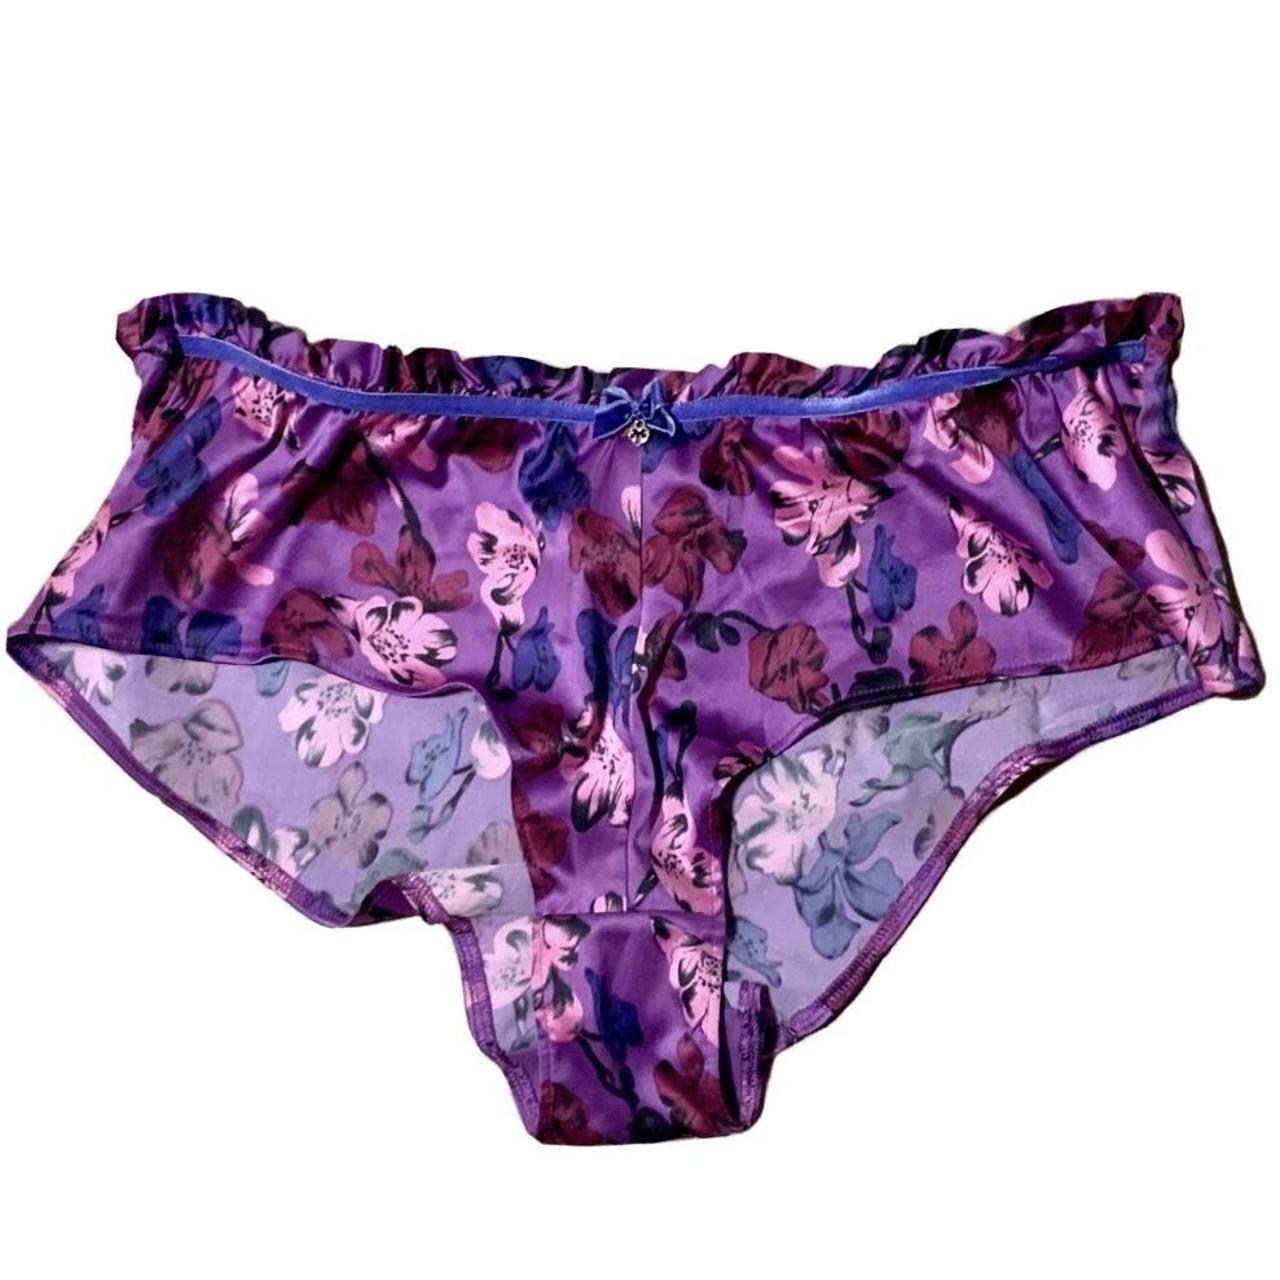 Figleaves Women's Purple and Pink Panties